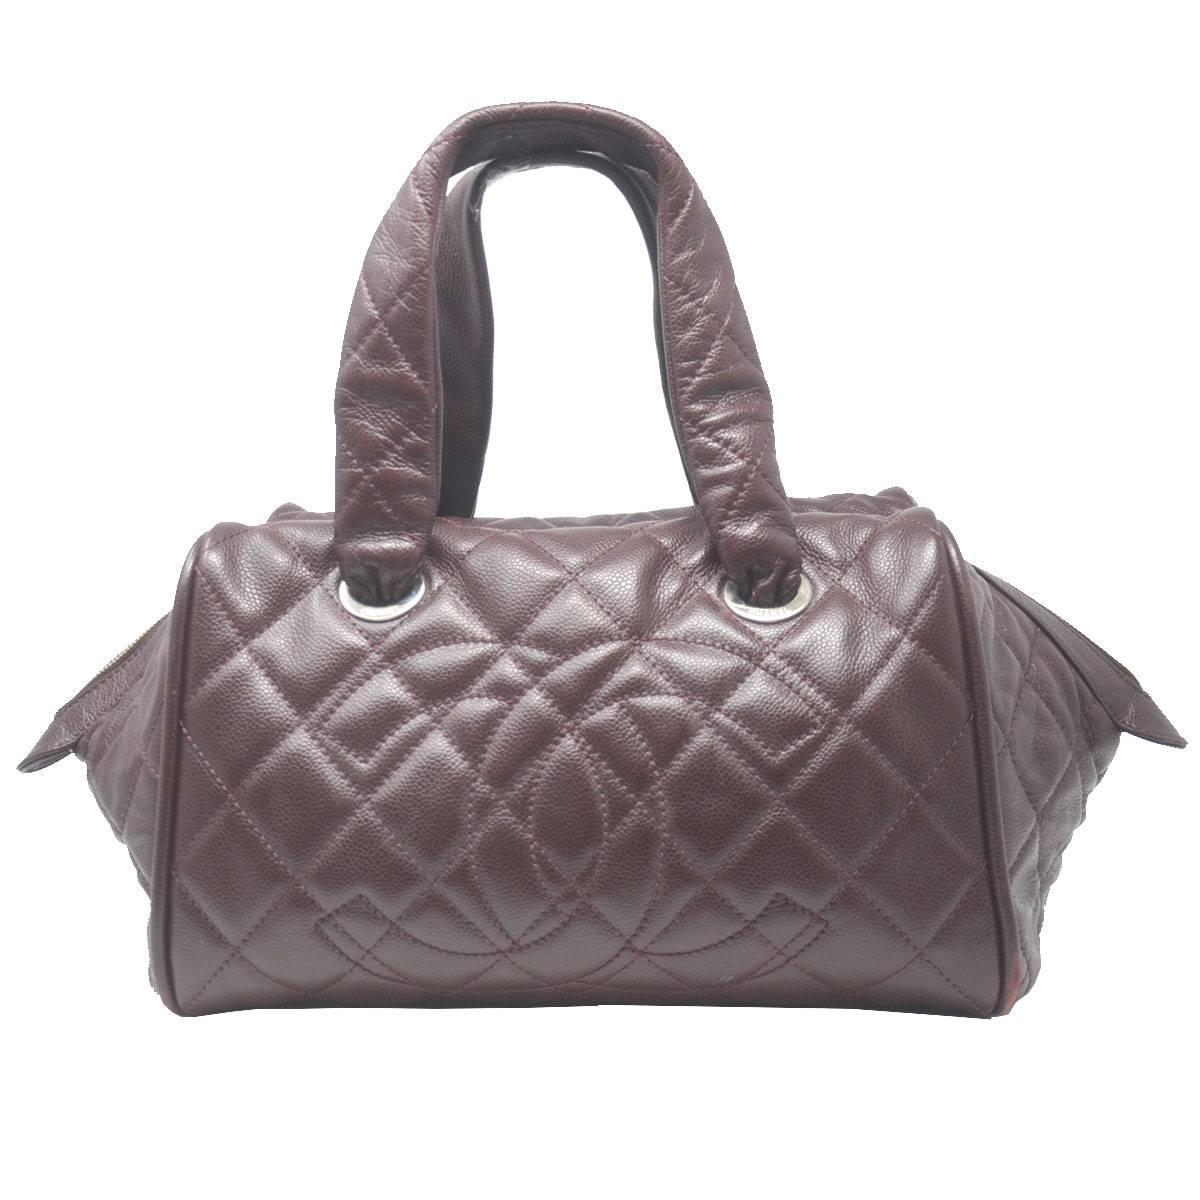 Chanel Burgundy Large Satchel Handbag